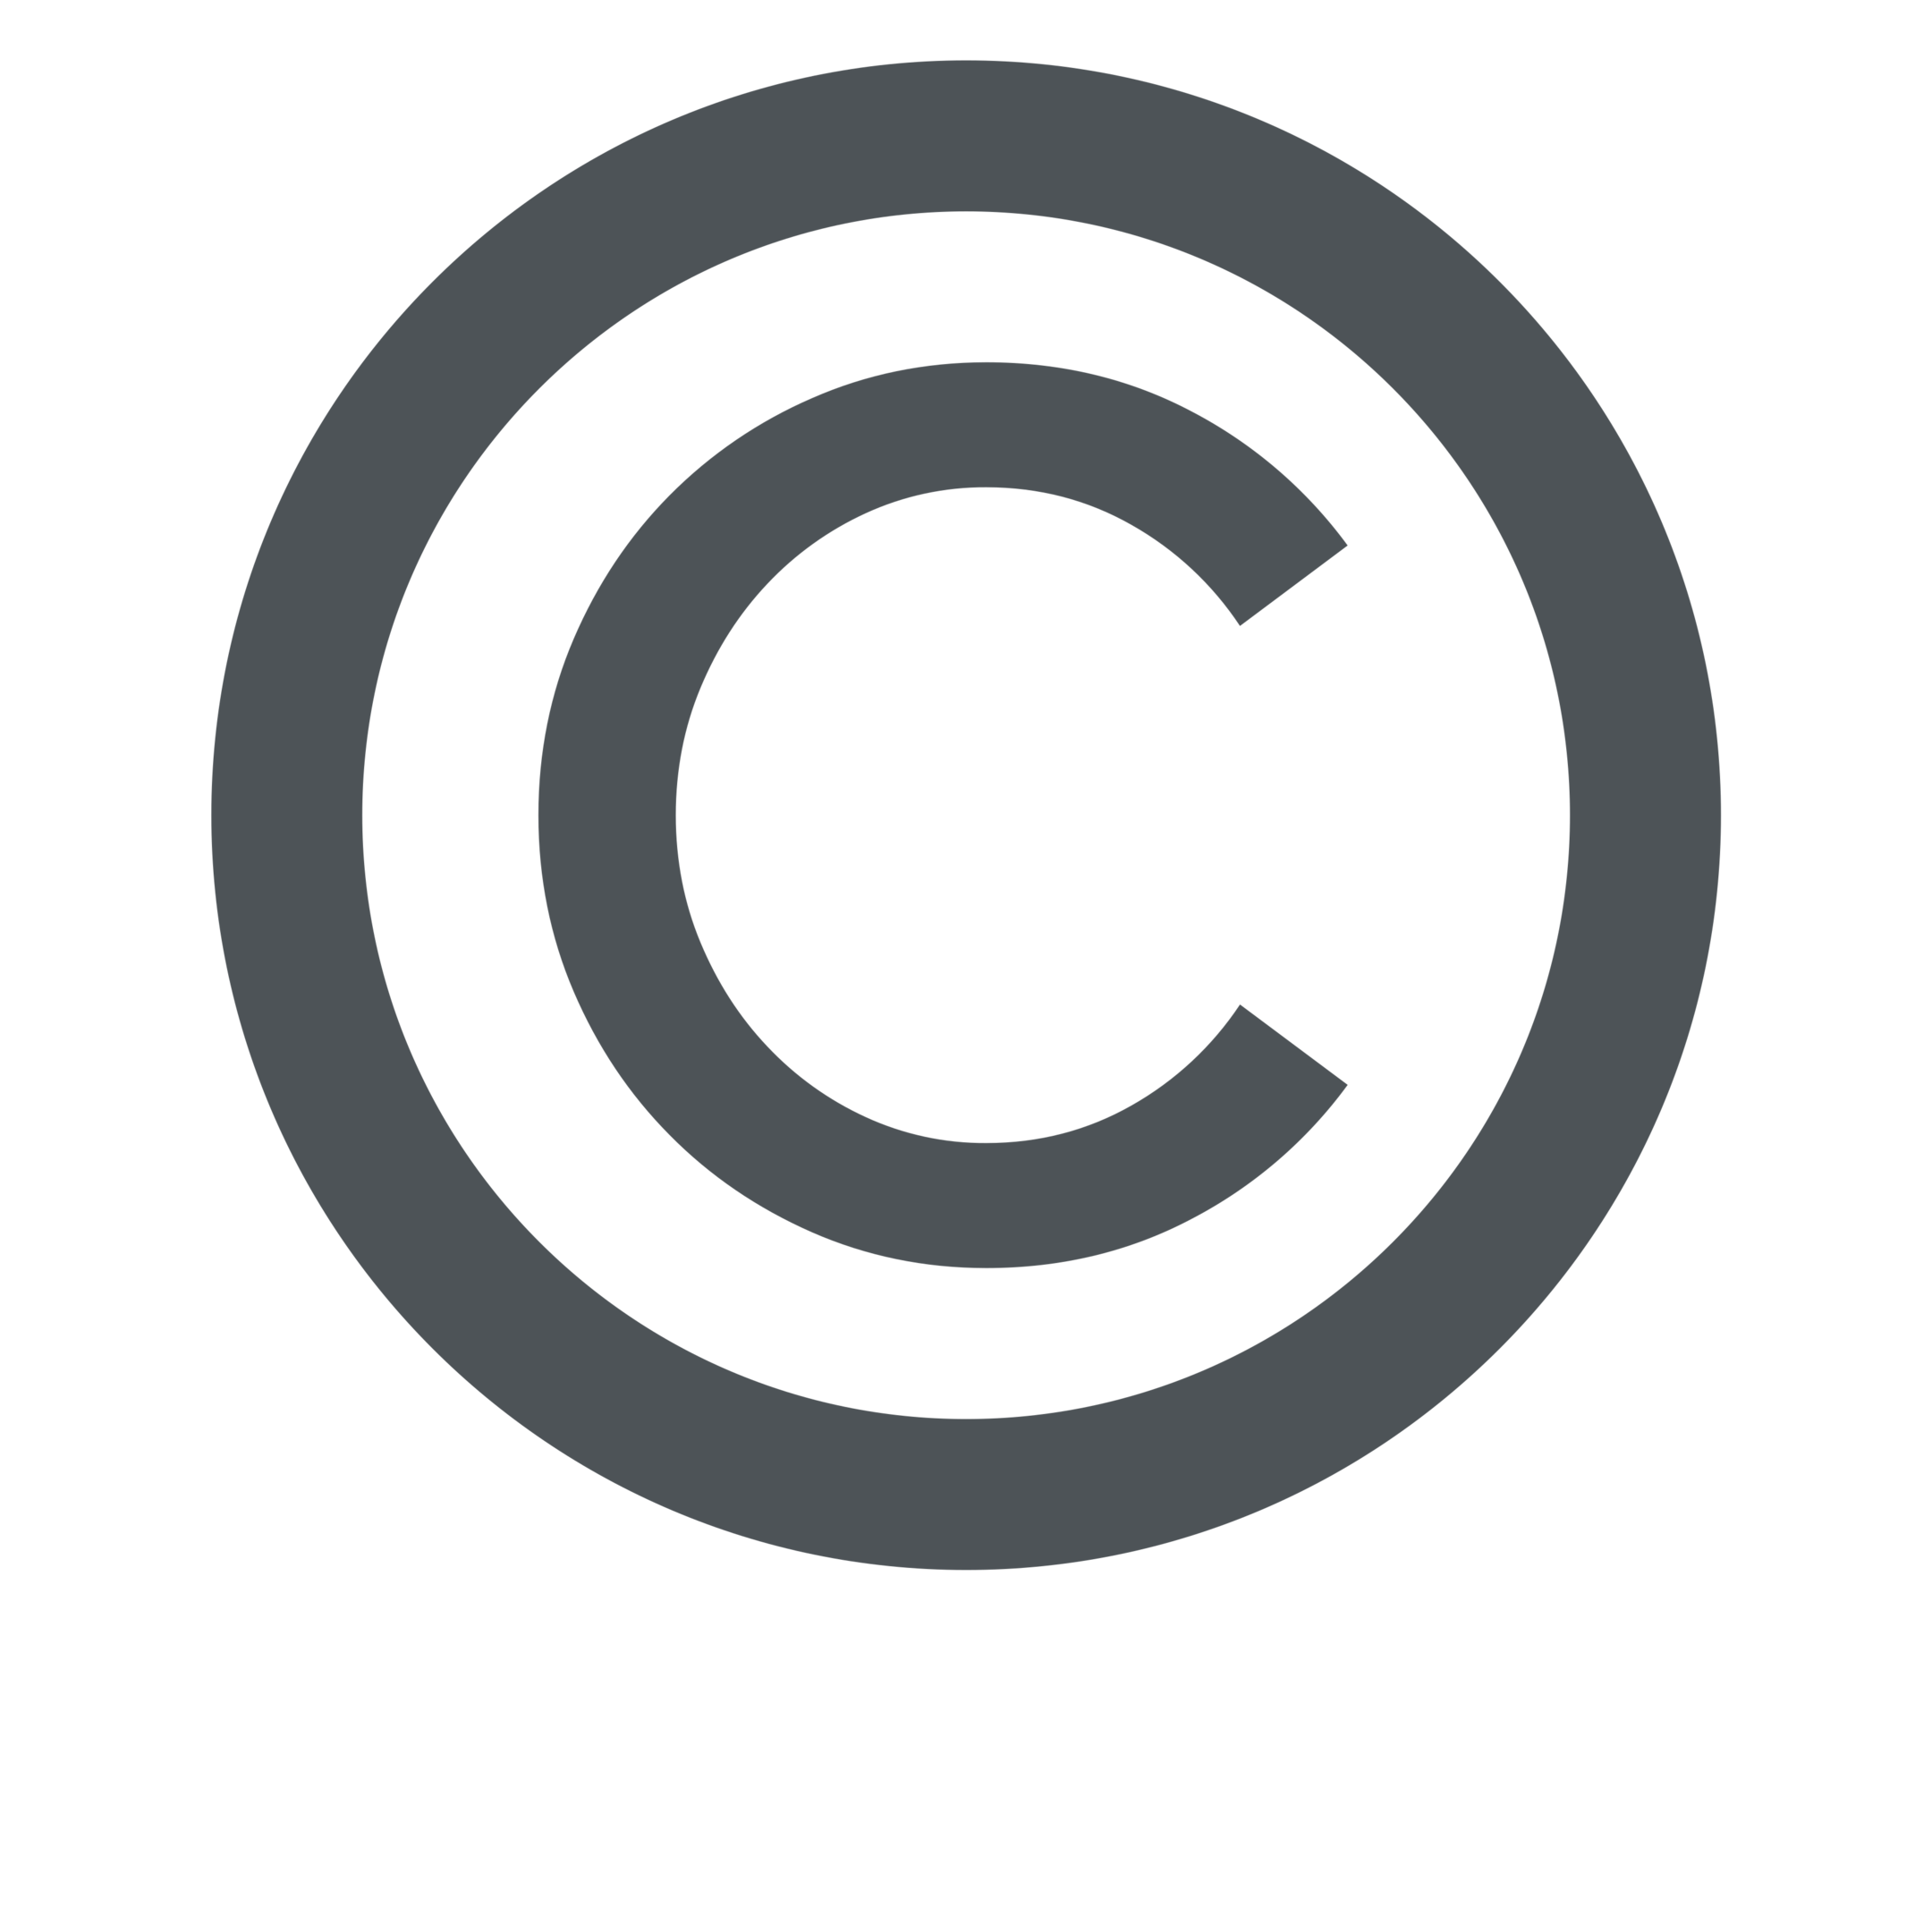 Copyright Symbol Transparent Image